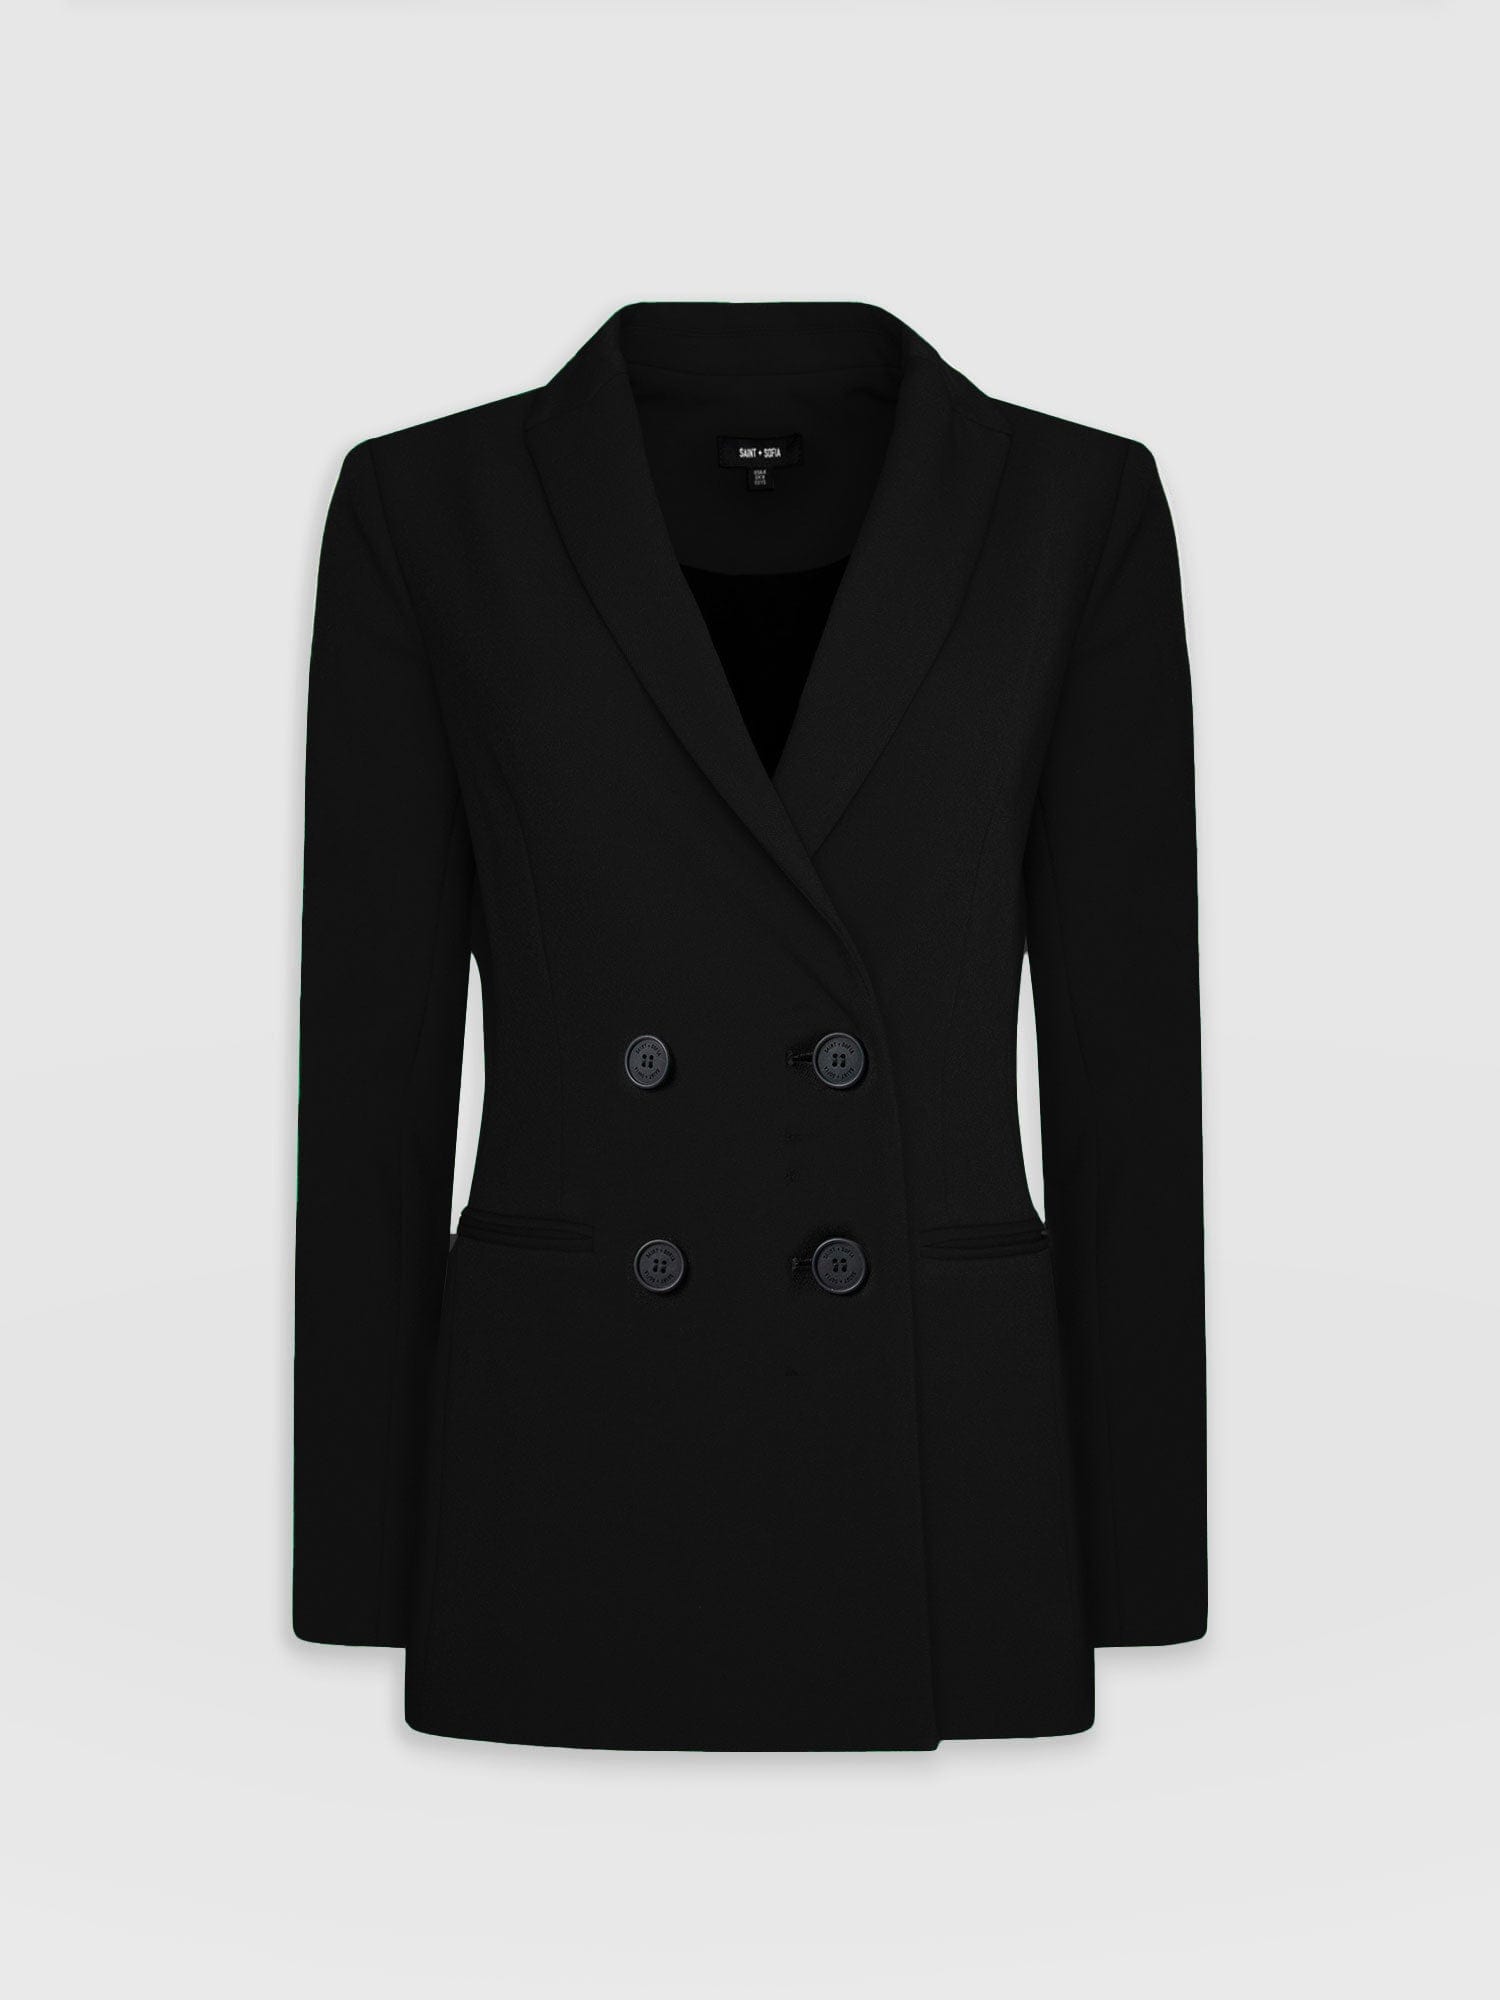 Zara Tweed Jacket Womens Brown Wool Country Hacking Blazer Size S | eBay